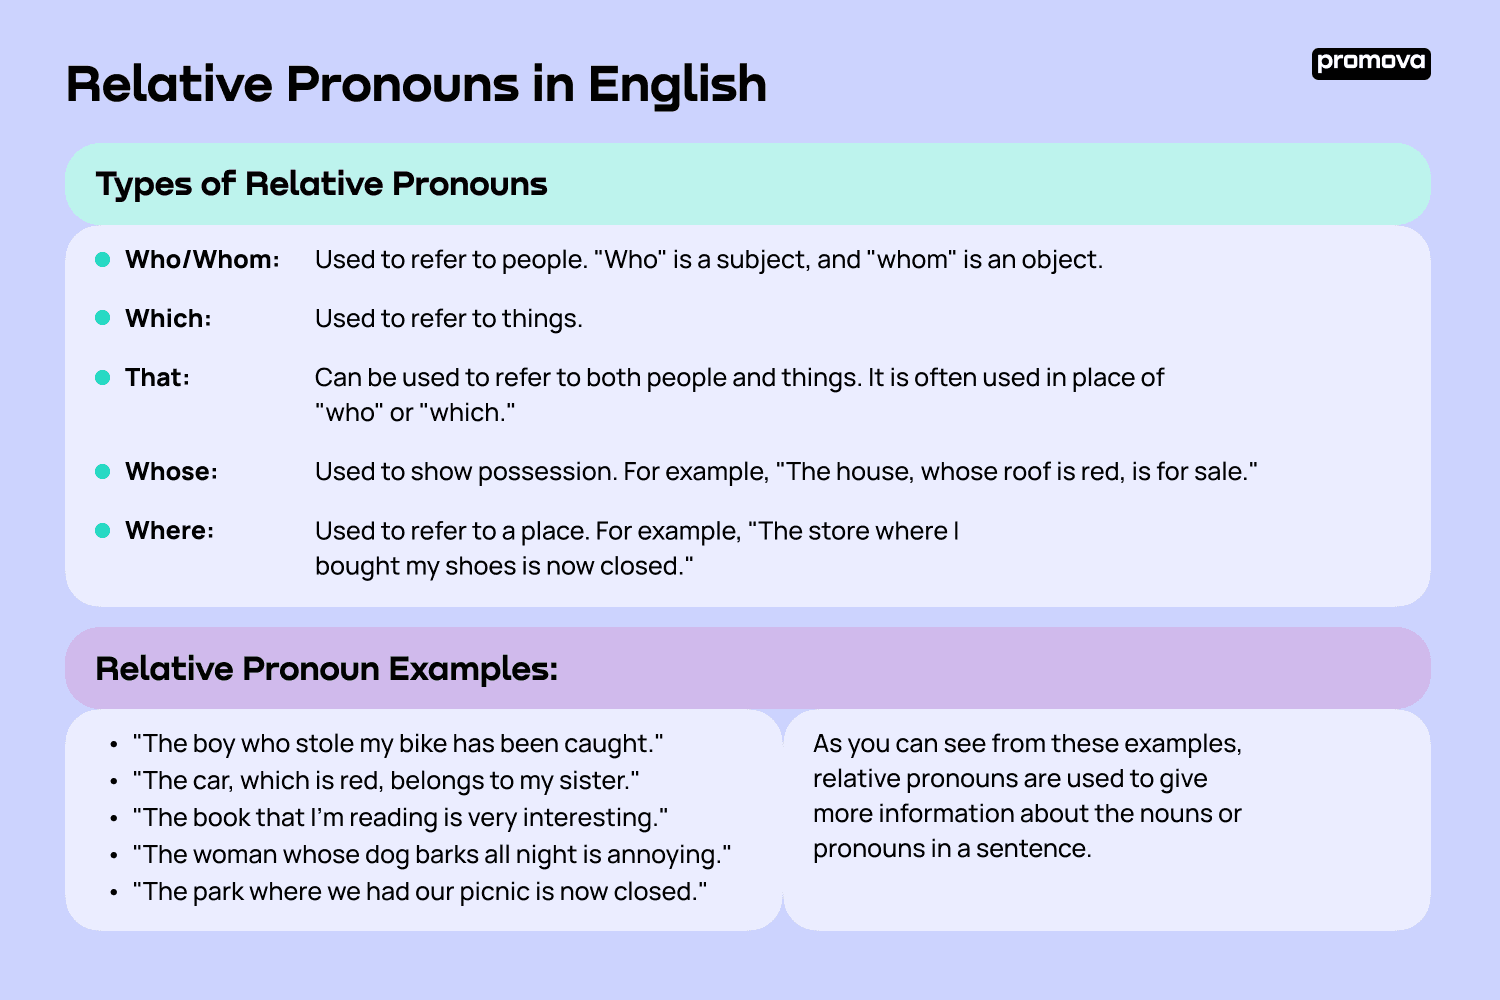 Types of Relative Pronouns